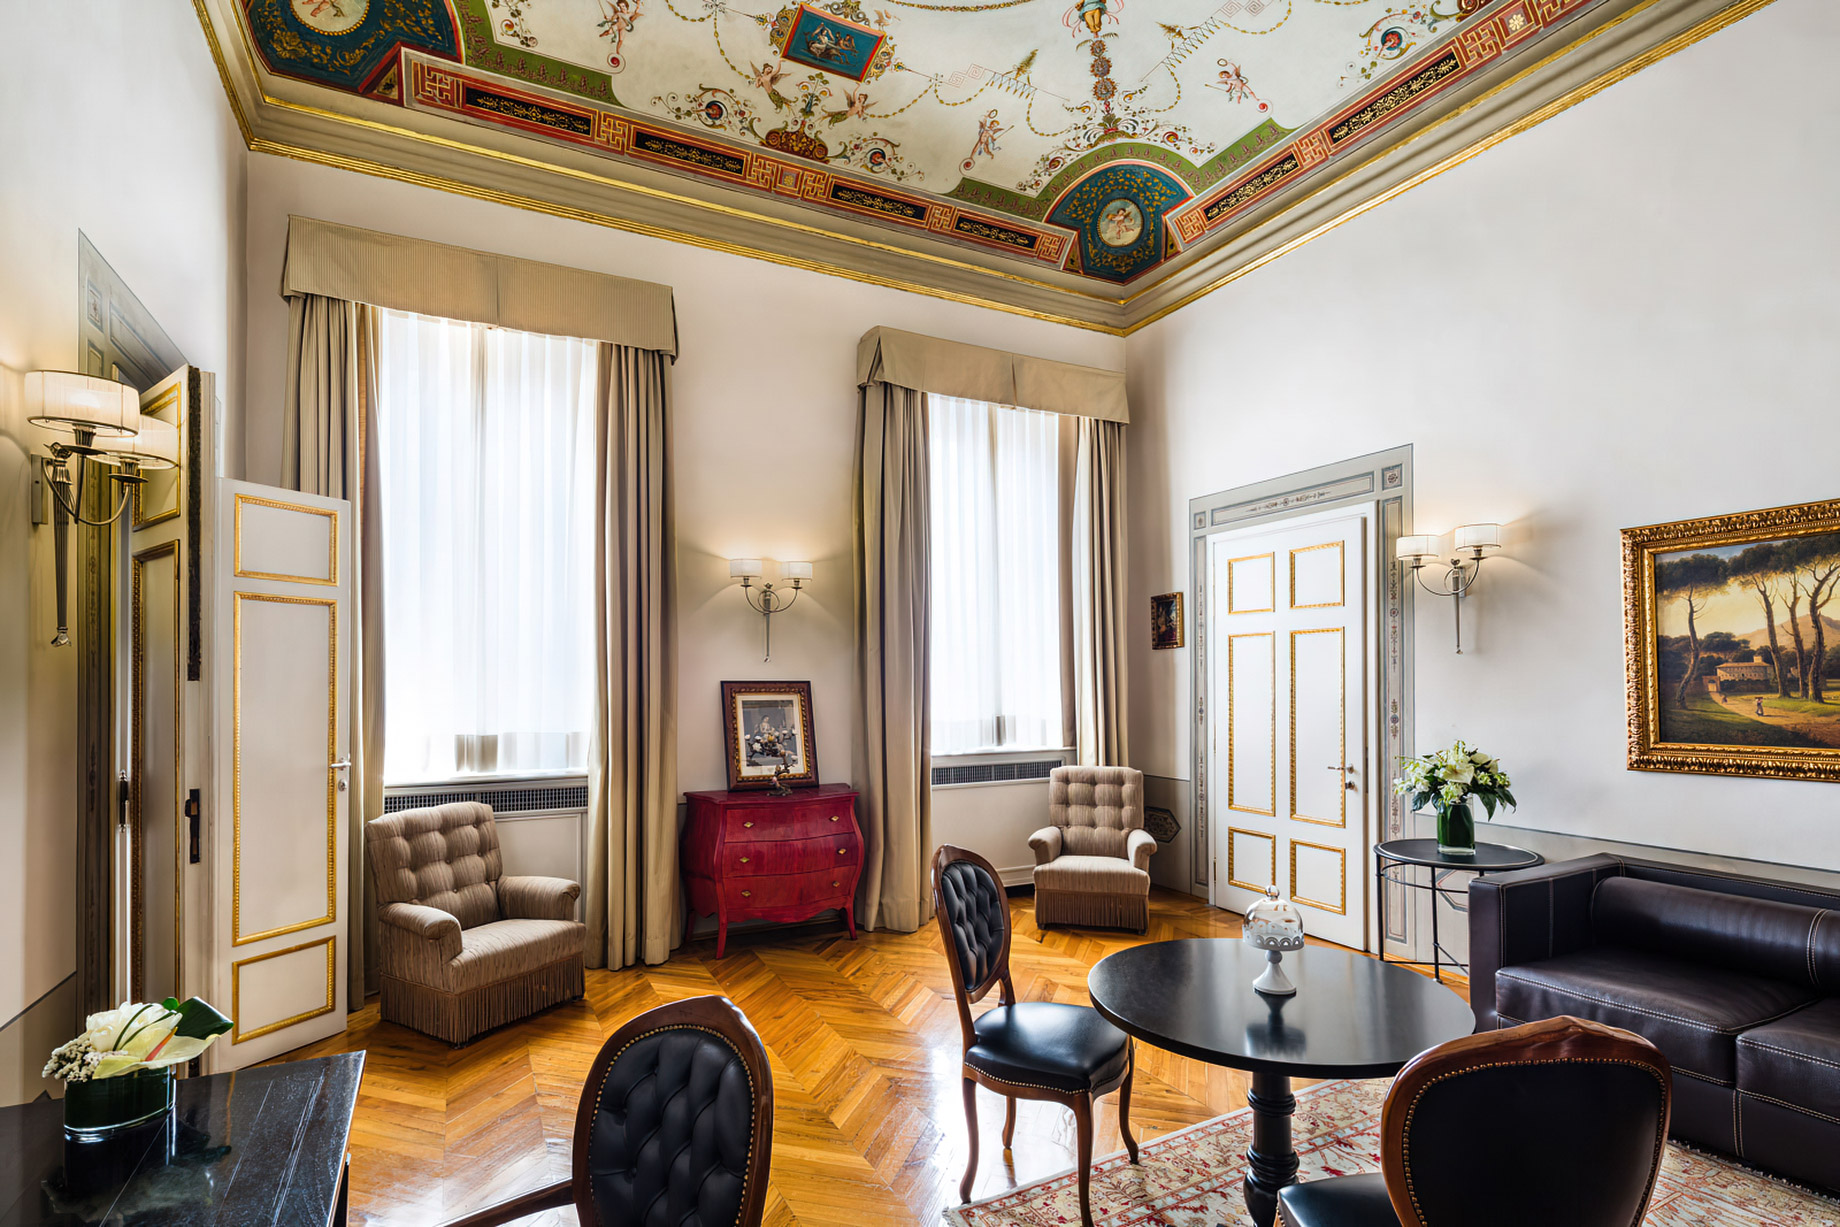 Relais Santa Croce By Baglioni Hotels & Resorts - Florence, Italy - Santa Croce Royal Suite